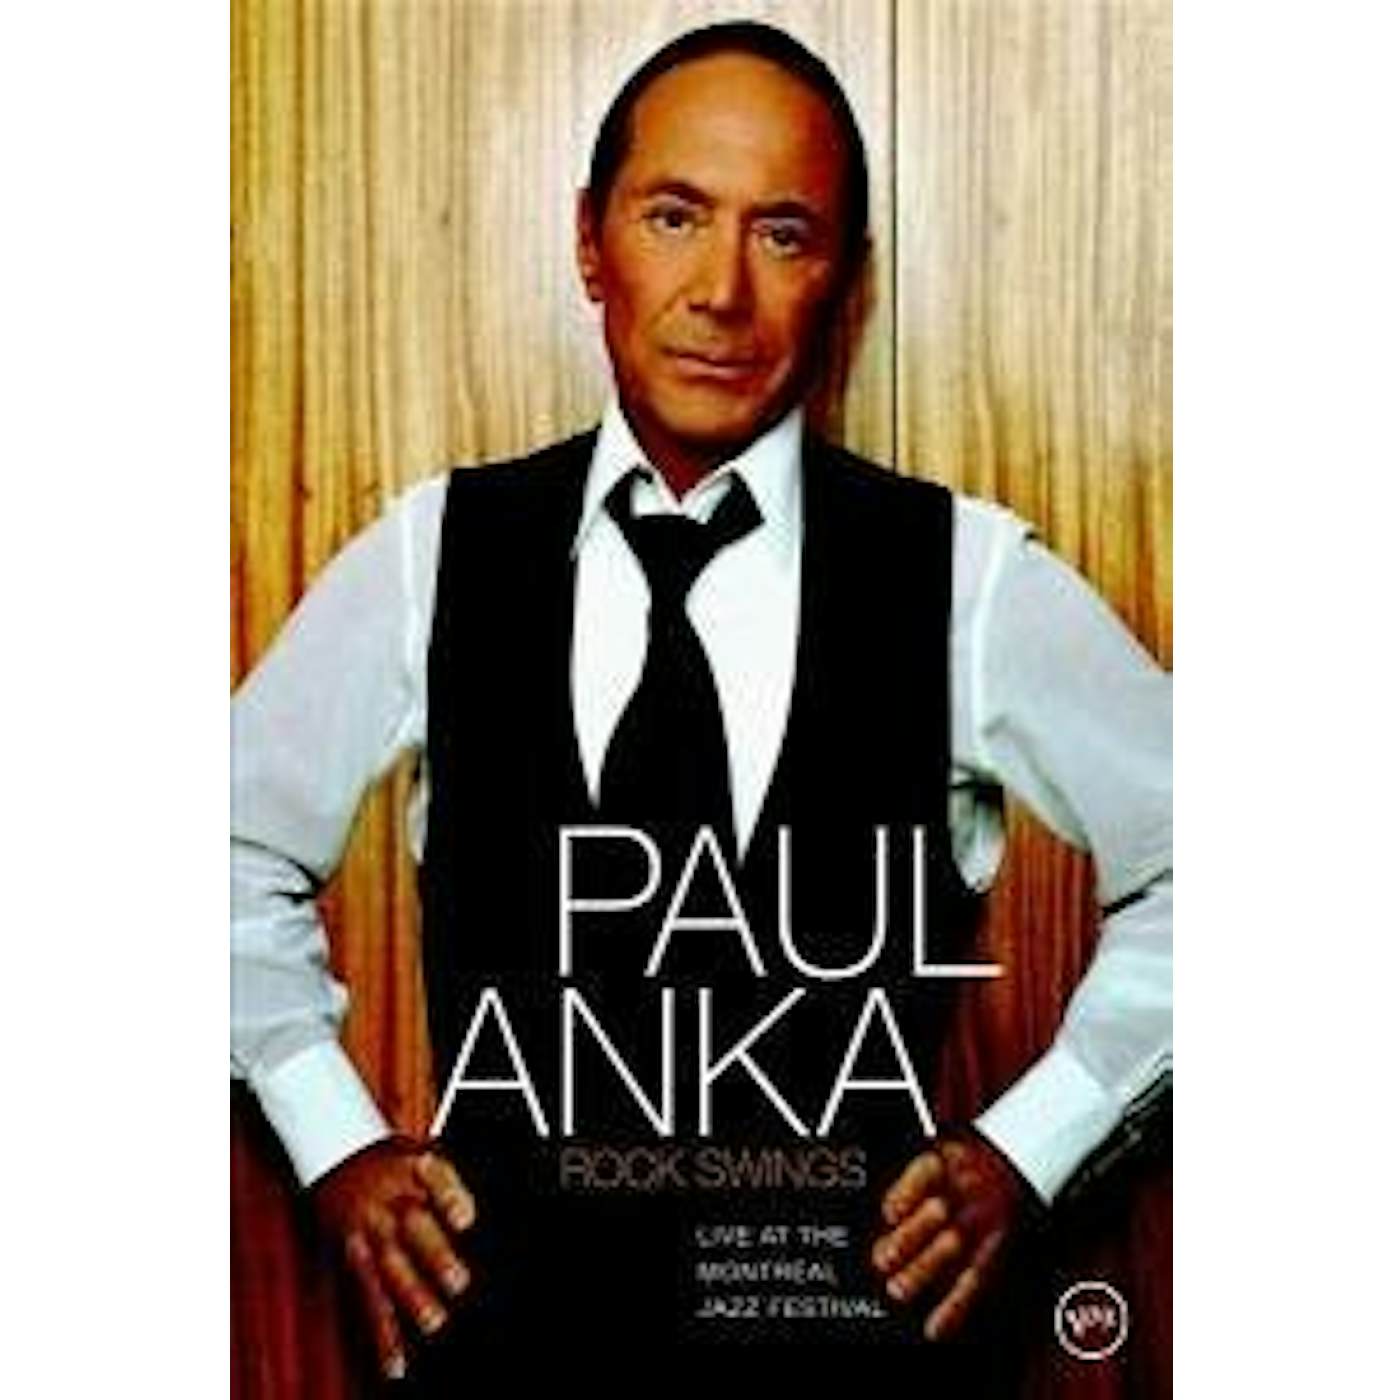 Paul Anka ROCK SWINGS' LIVE AT THE MONTREAL JAZZ FEST DVD